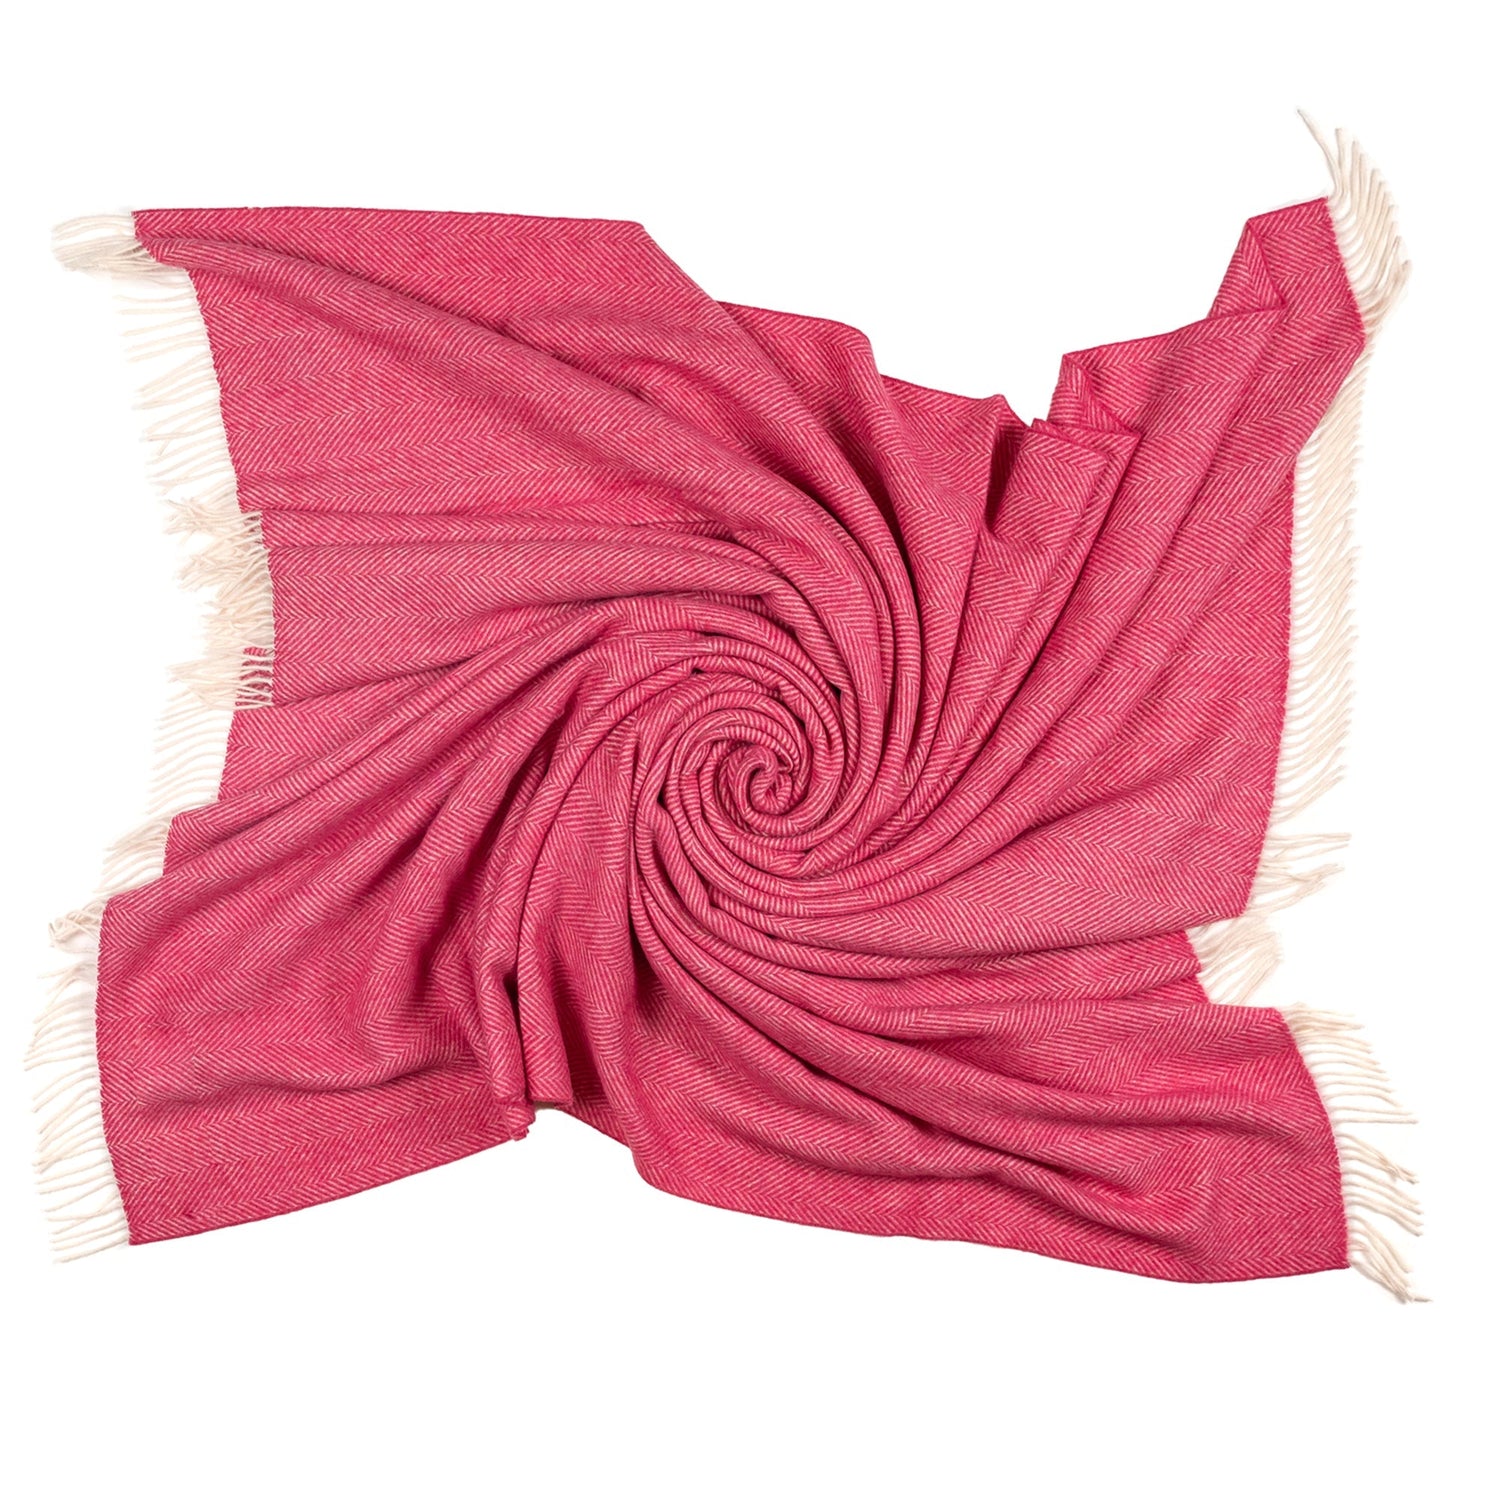 Southampton Home Merino Wool Herringbone Throw (Pink )-Throws and Blankets-Q029005-Prince of Scots